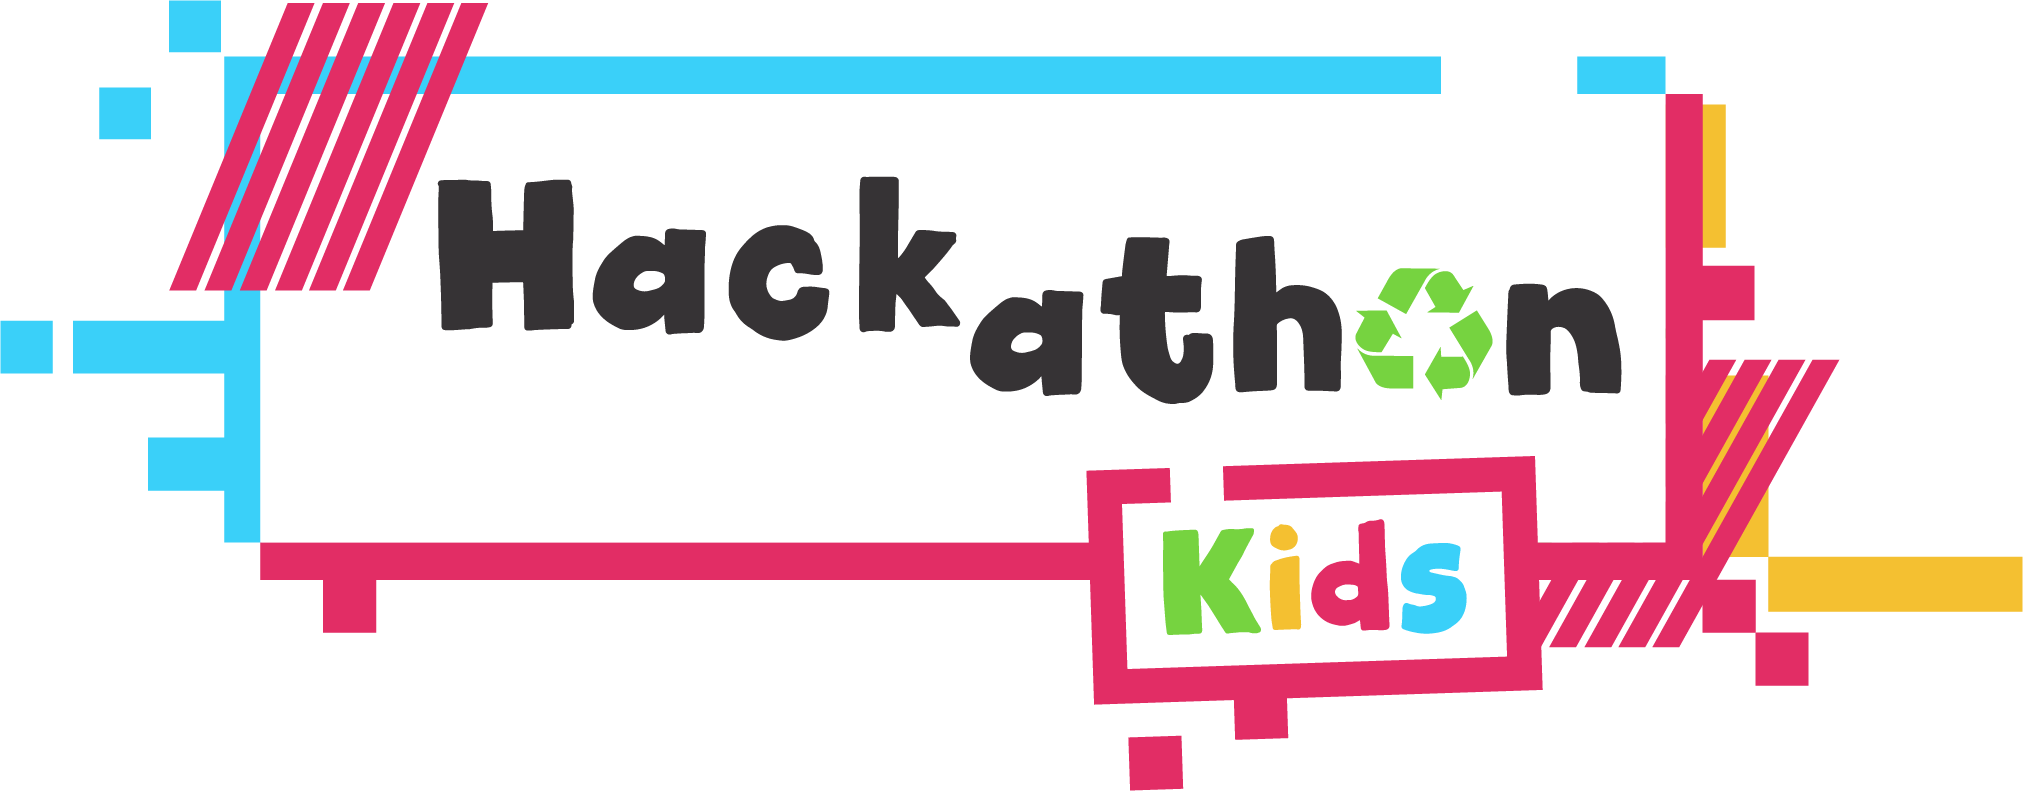 Hackathon Kids-01